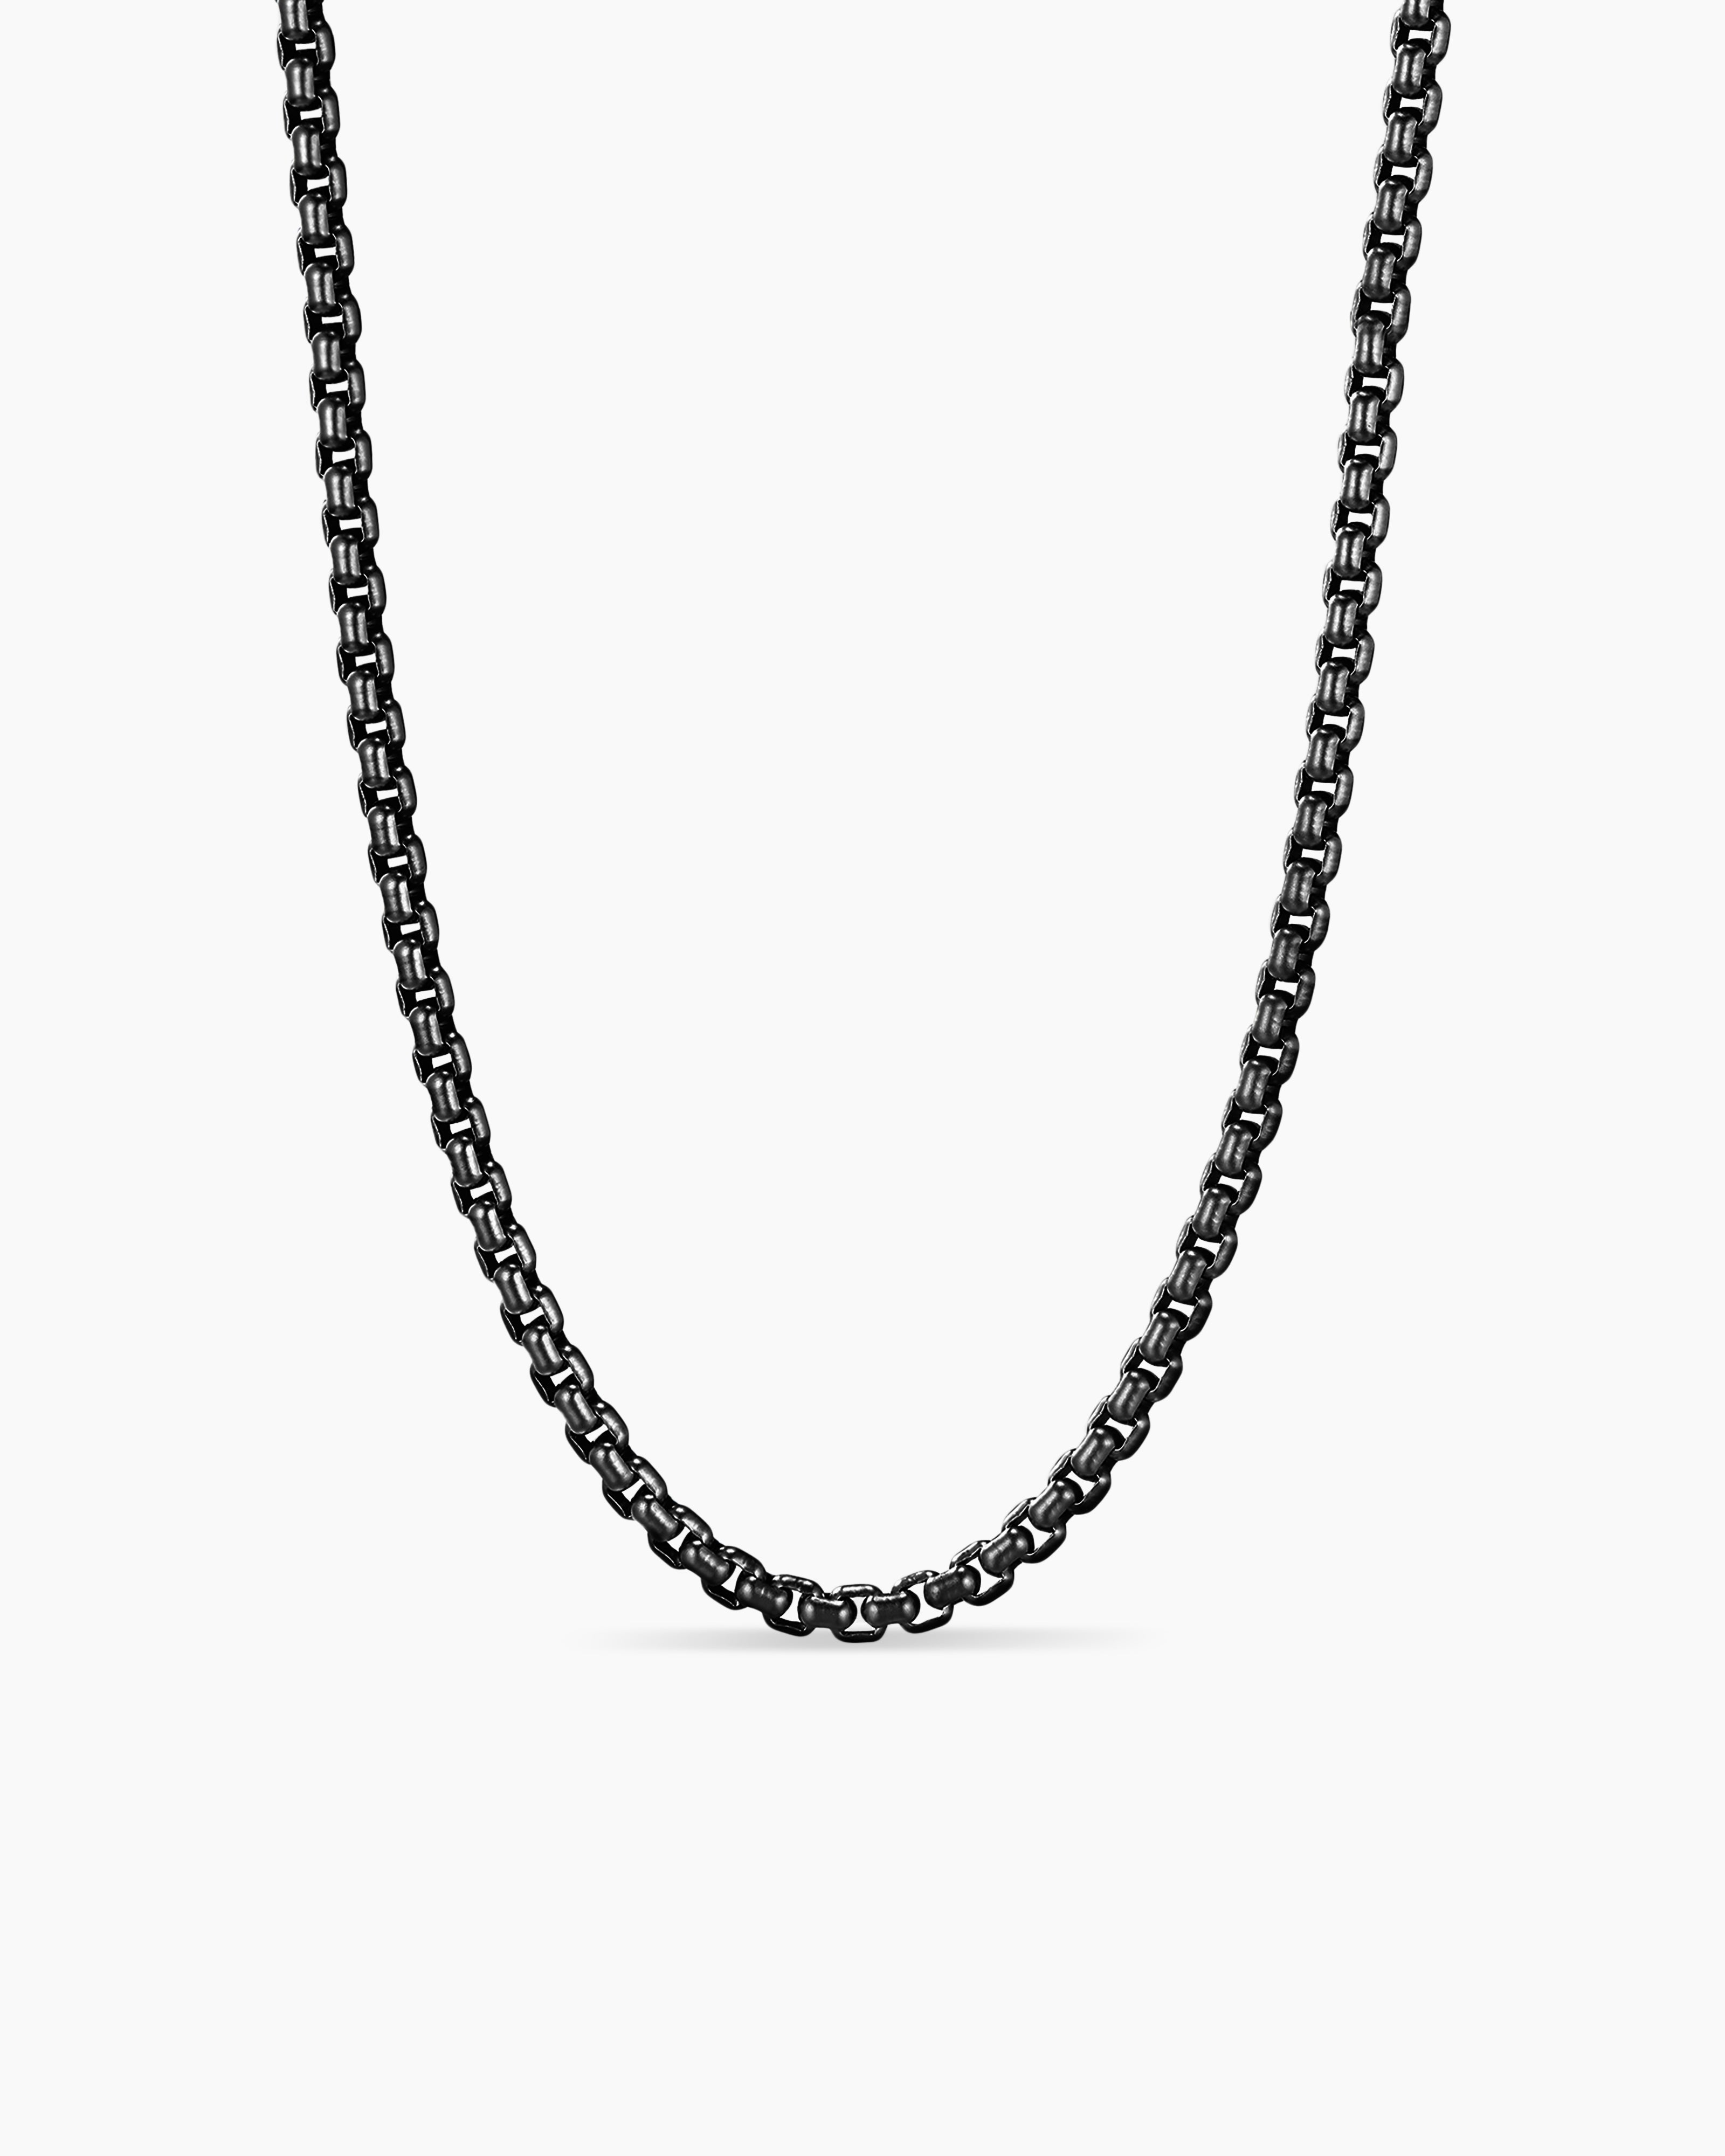 David Yurman Men's Box Chain Necklace in Darkened Stainless Steel, 4mm